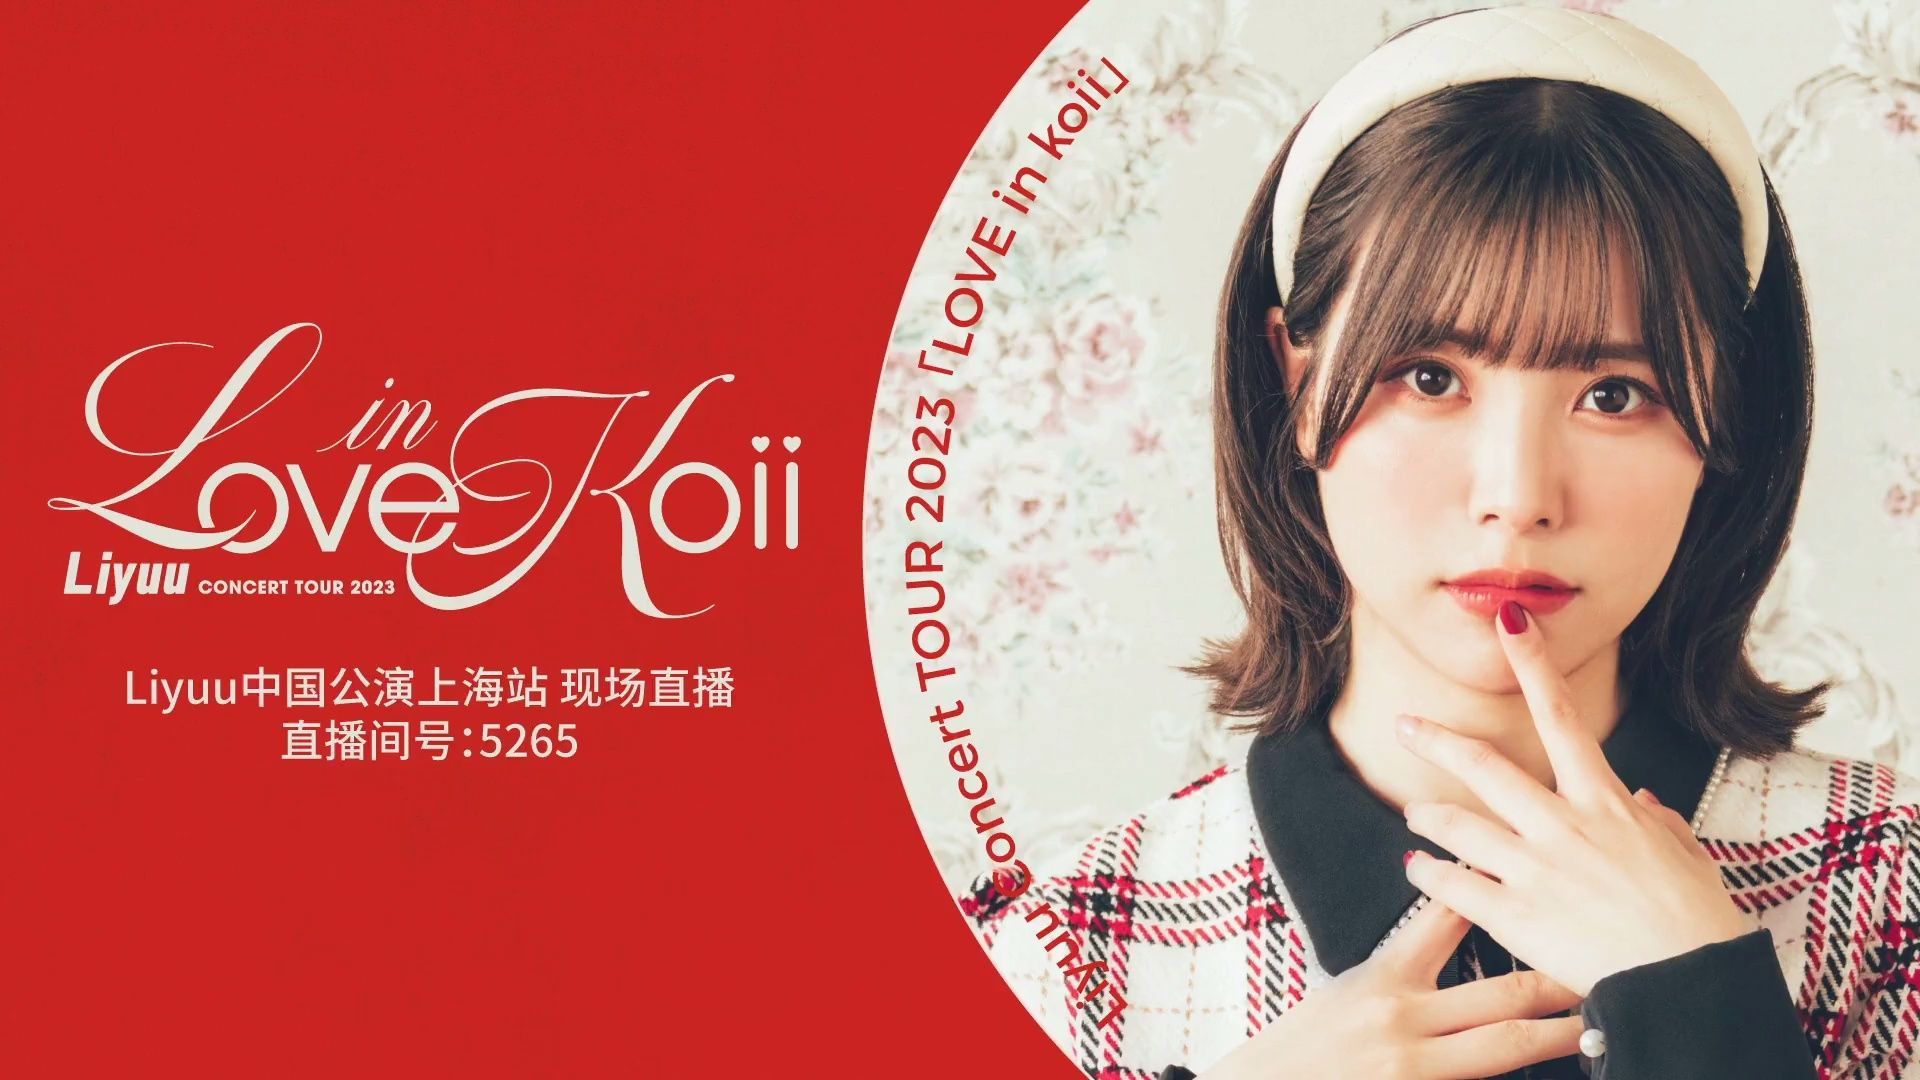 Liyuu Concert TOUR 2023「LOVE in koii」Shanghai Public Performance